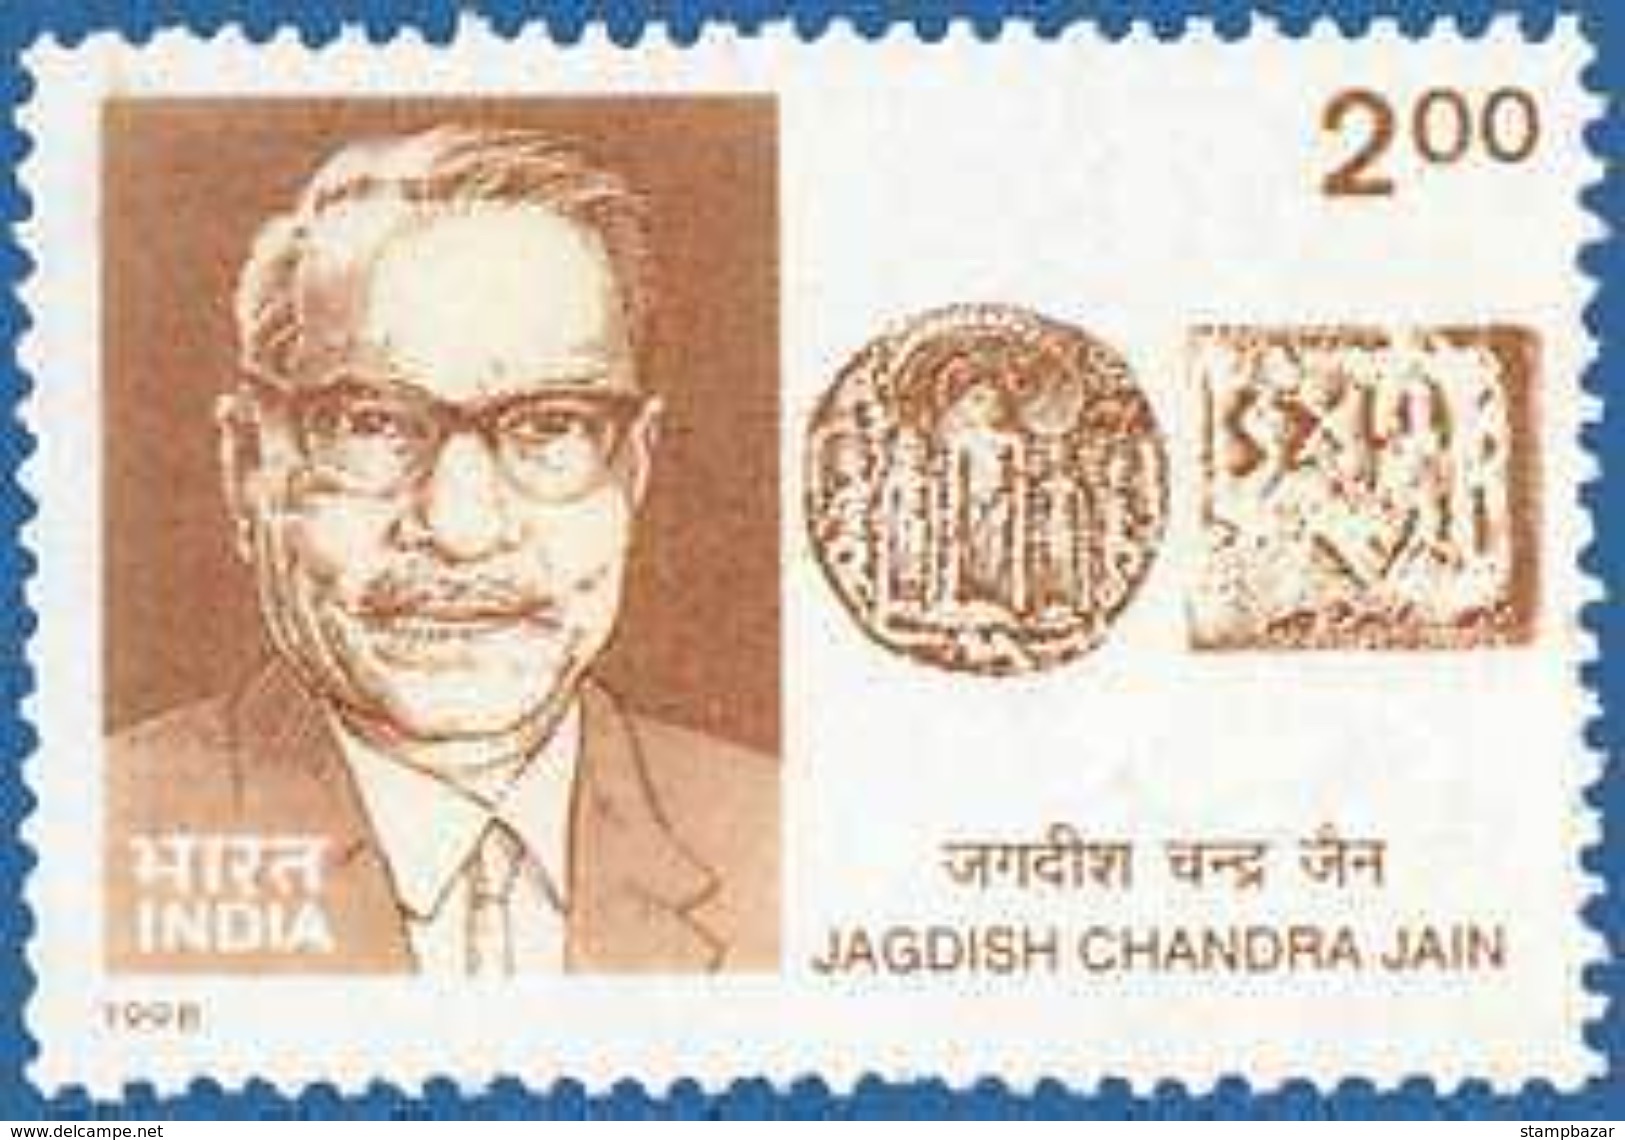 INDIA 1998 Professor Dr. Jagdish Chandra Jain Scholar Indologist Coin On Stamp 1v MNH - Monedas